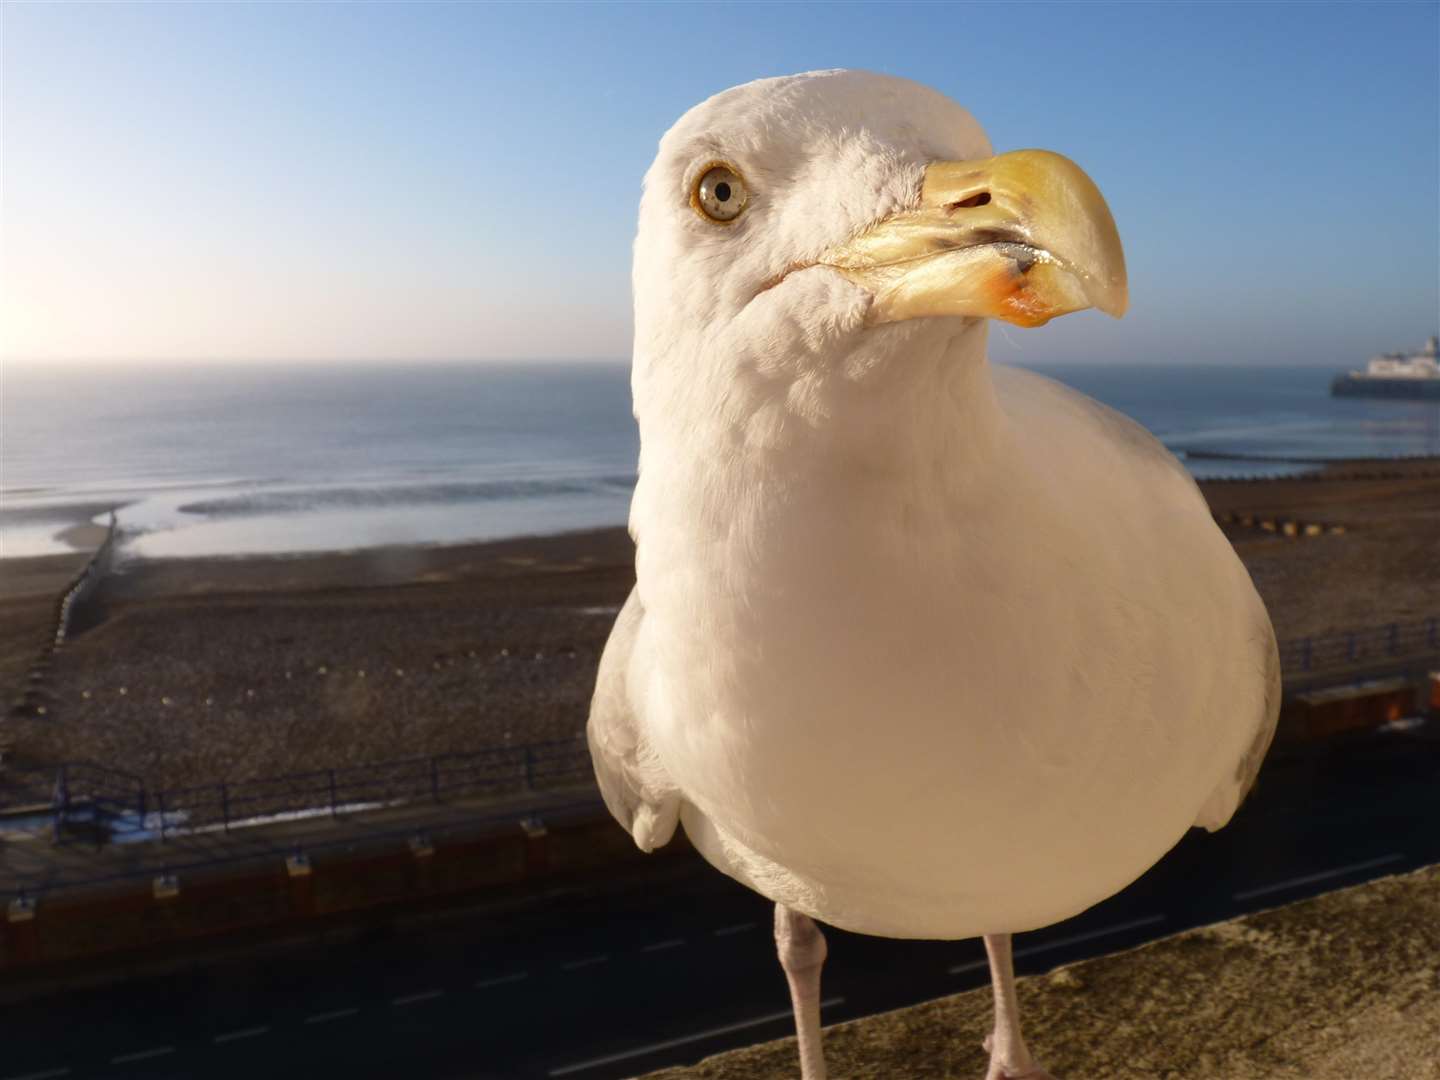 Warning - do not feed the gulls